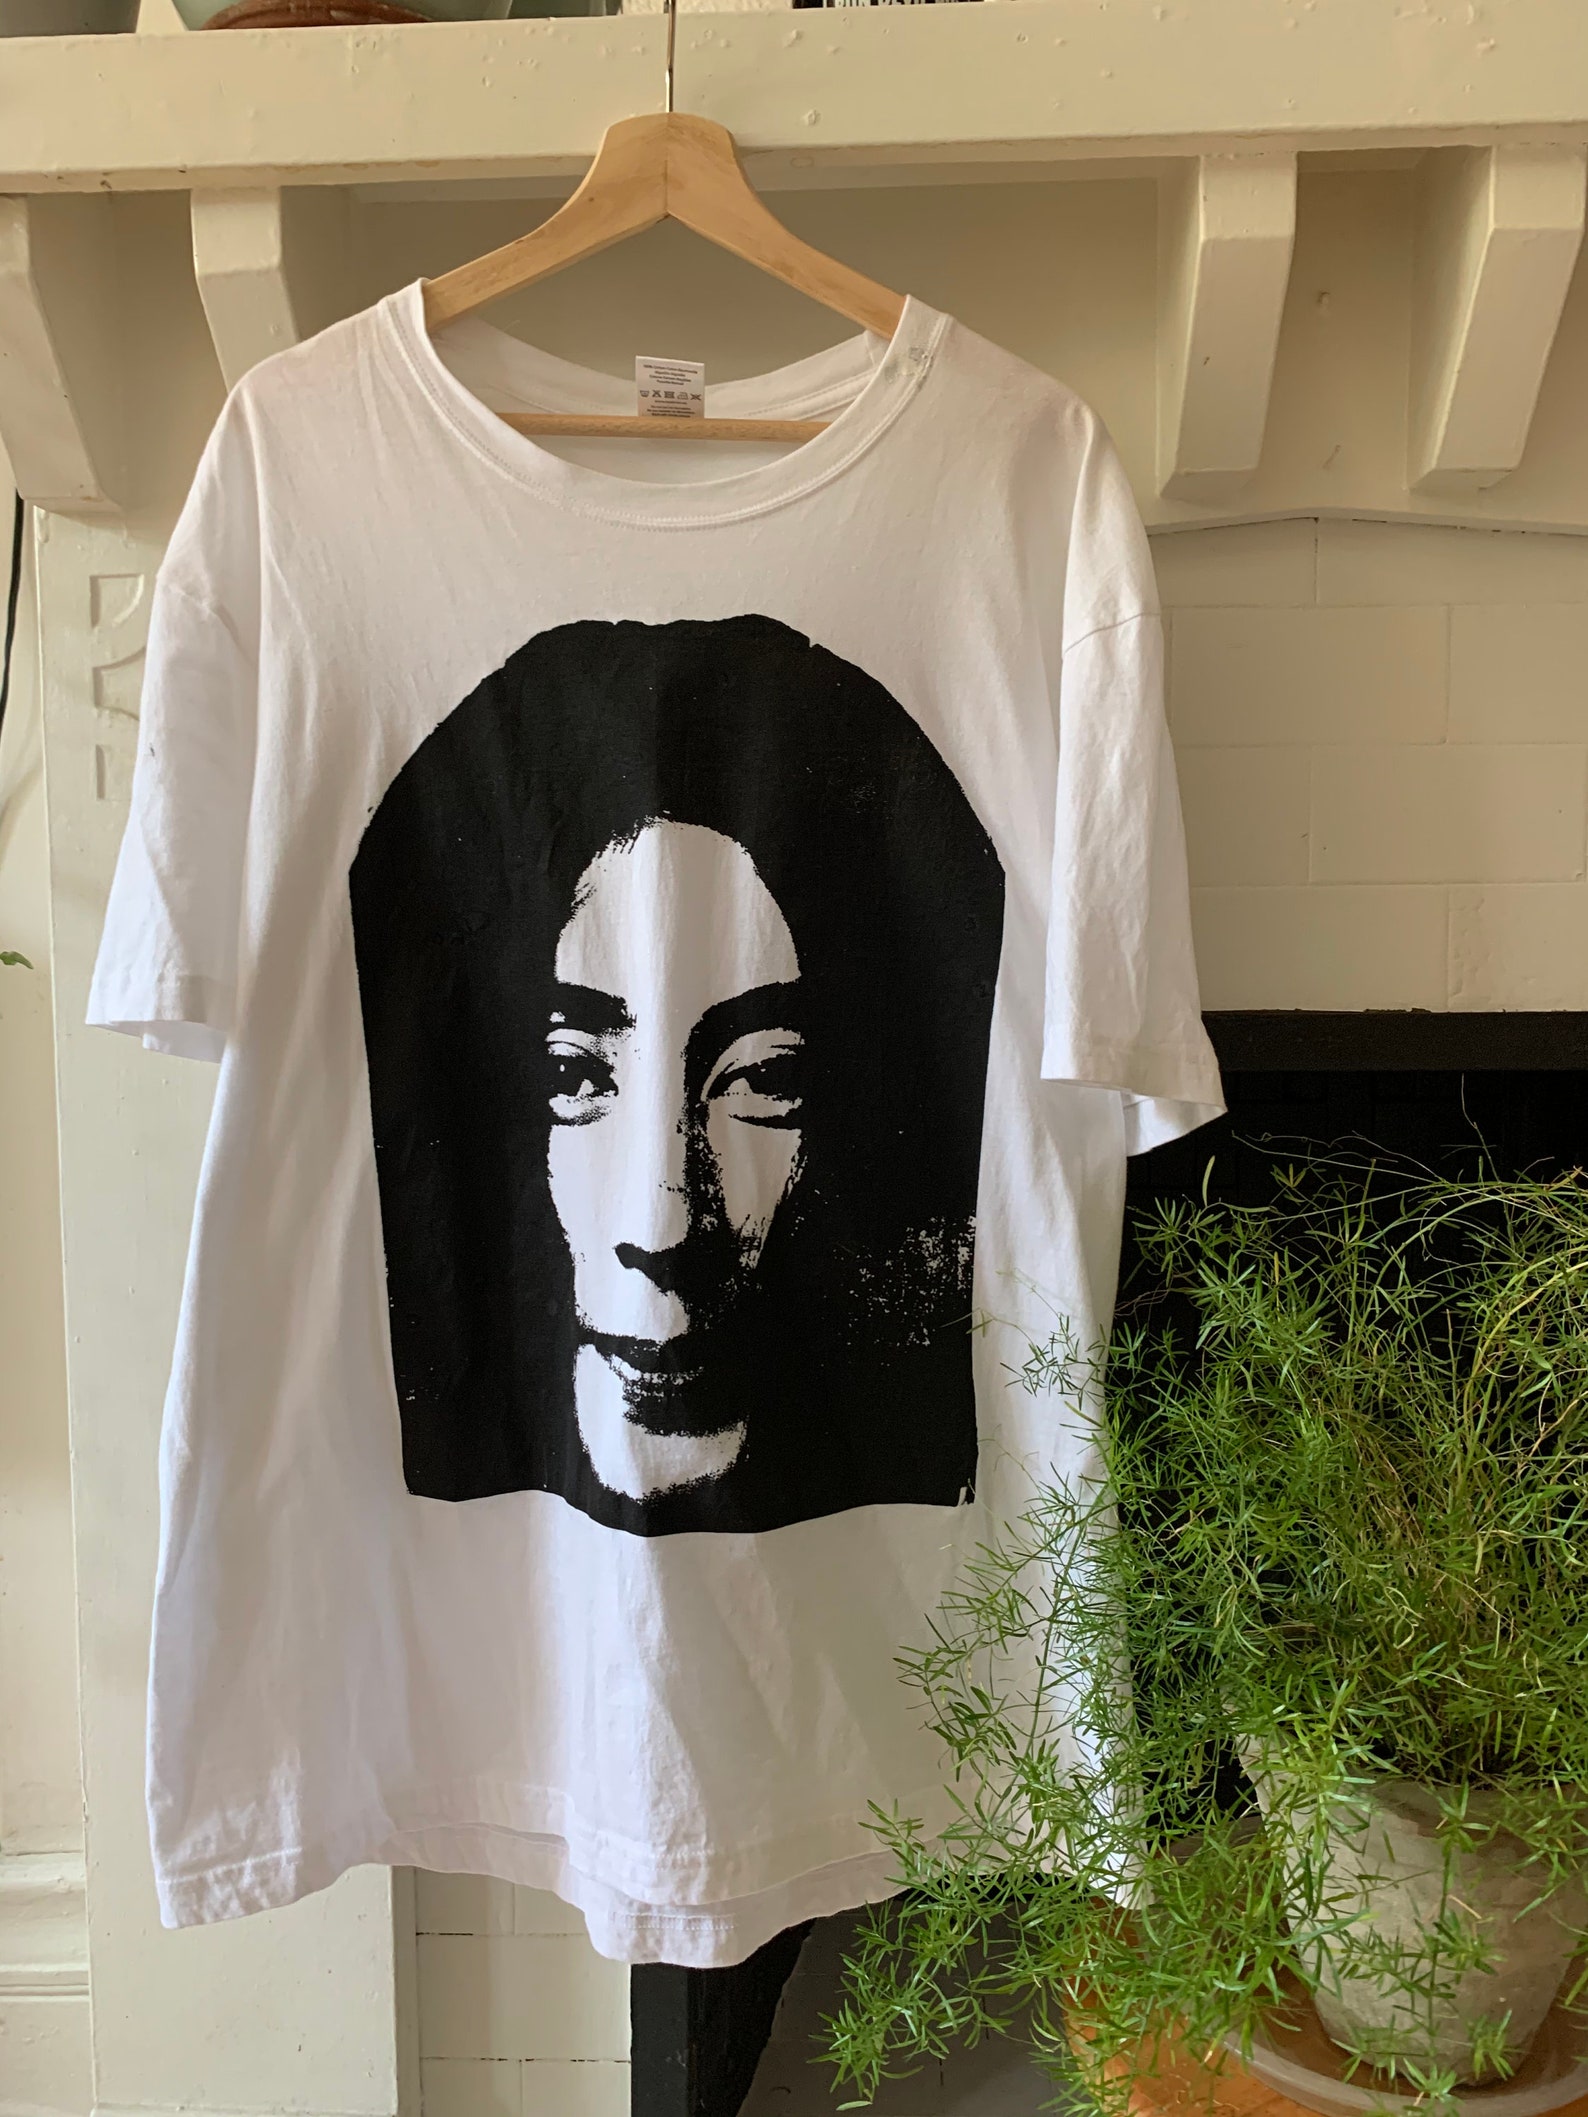 YOKO ONO Portrait Handmade Silkscreened T-shirt - Etsy